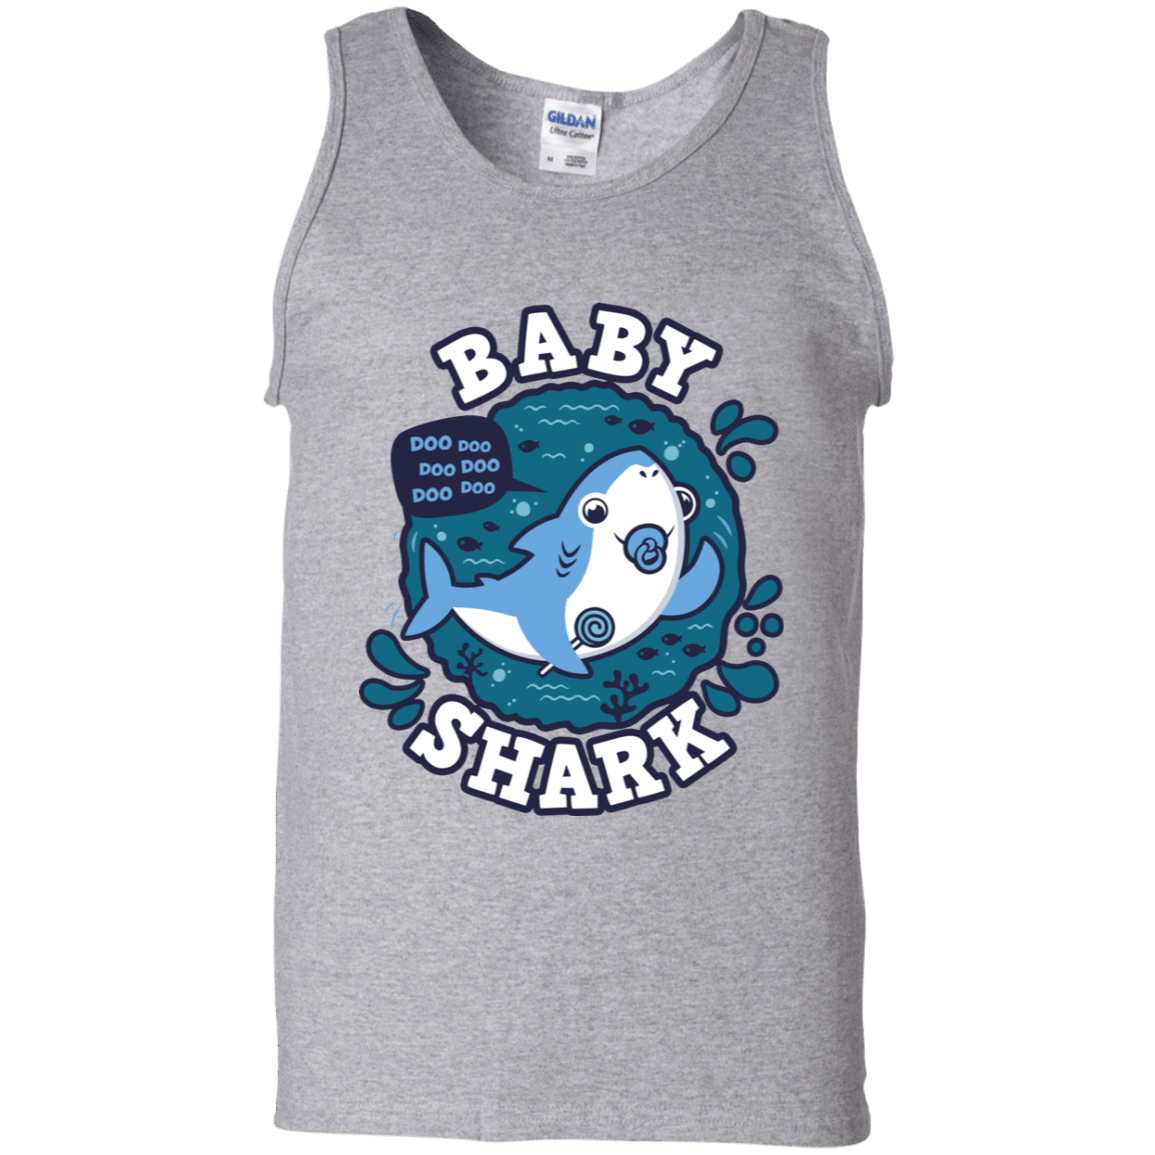 T-Shirts Sport Grey / S Shark Family trazo - Baby Boy chupete Men's Tank Top